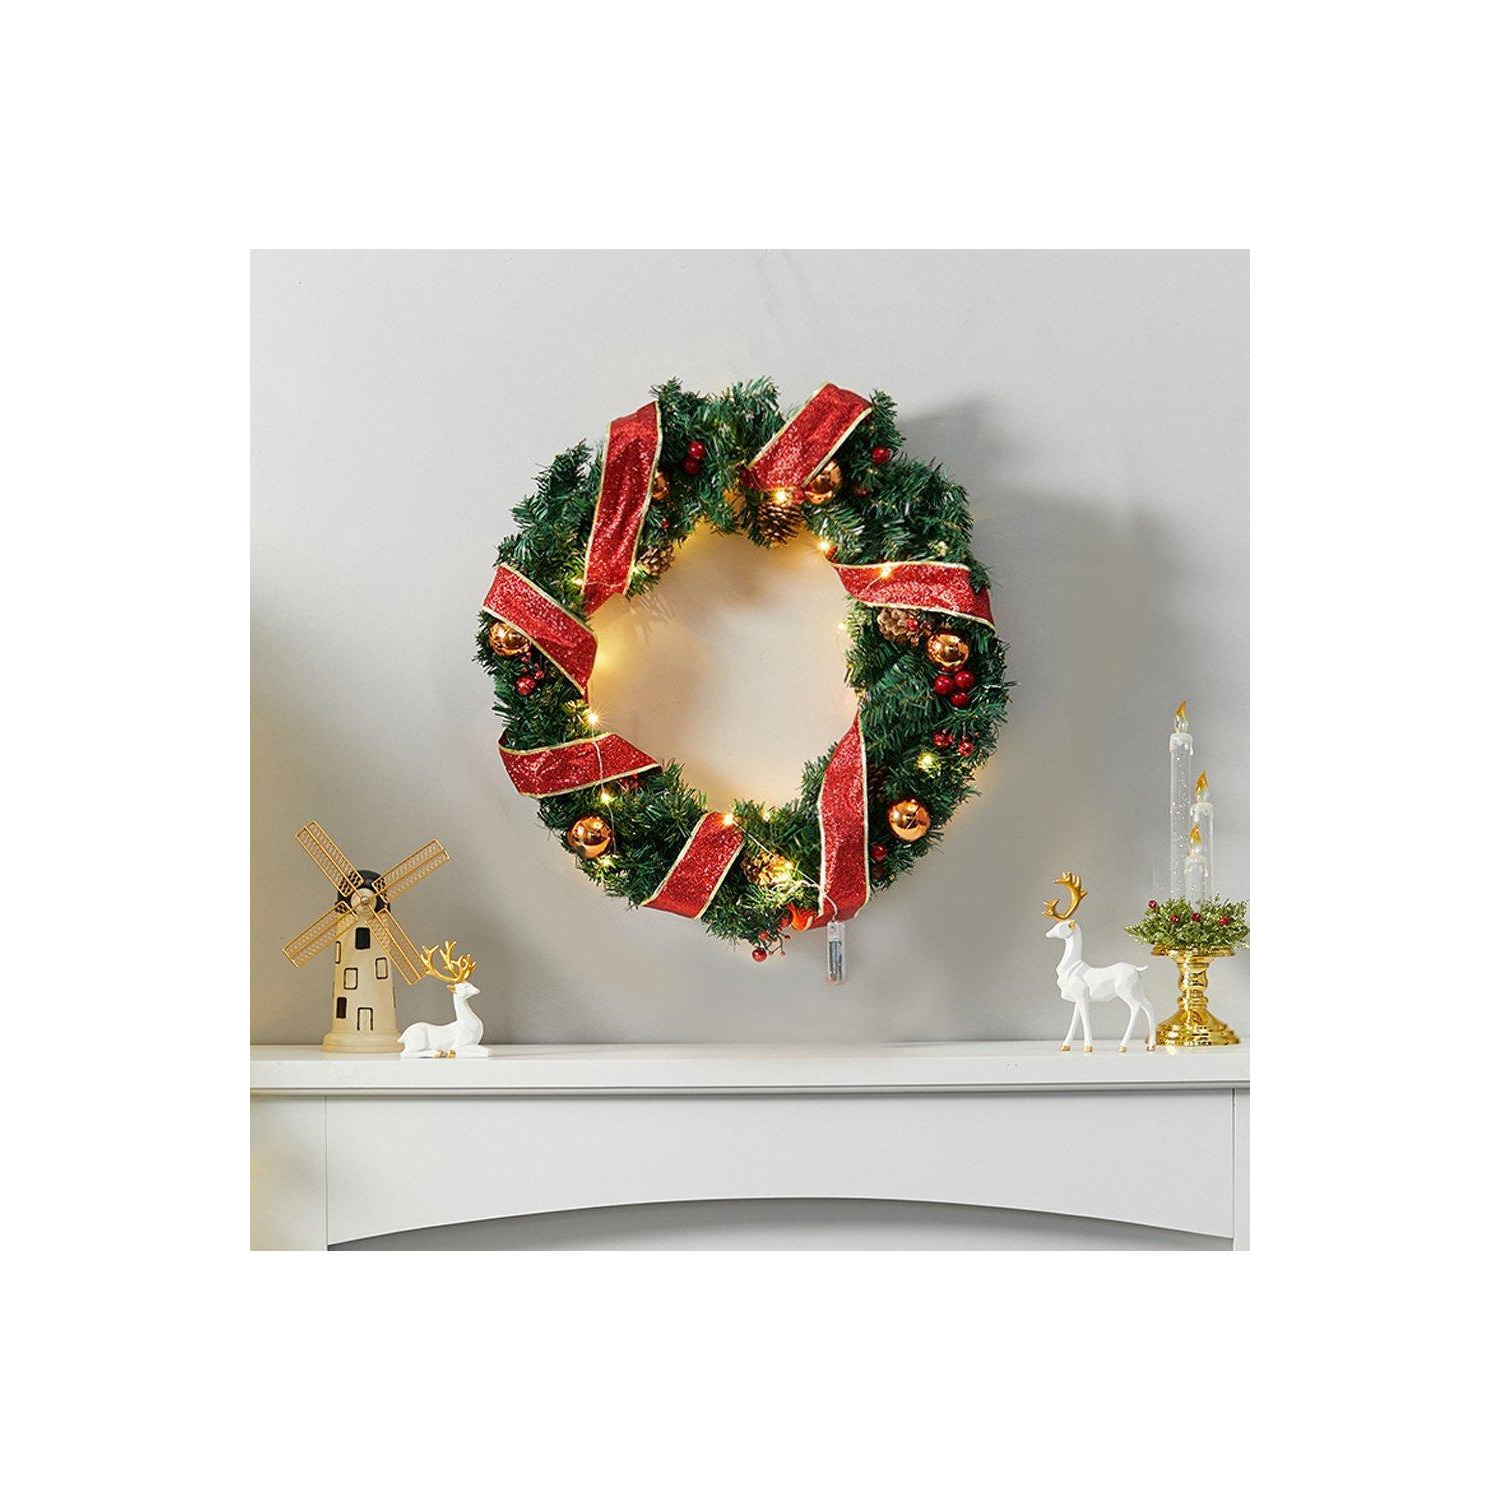 D50cm Ribbon Lighted Wreath Hanging Christmas Decor - image 1